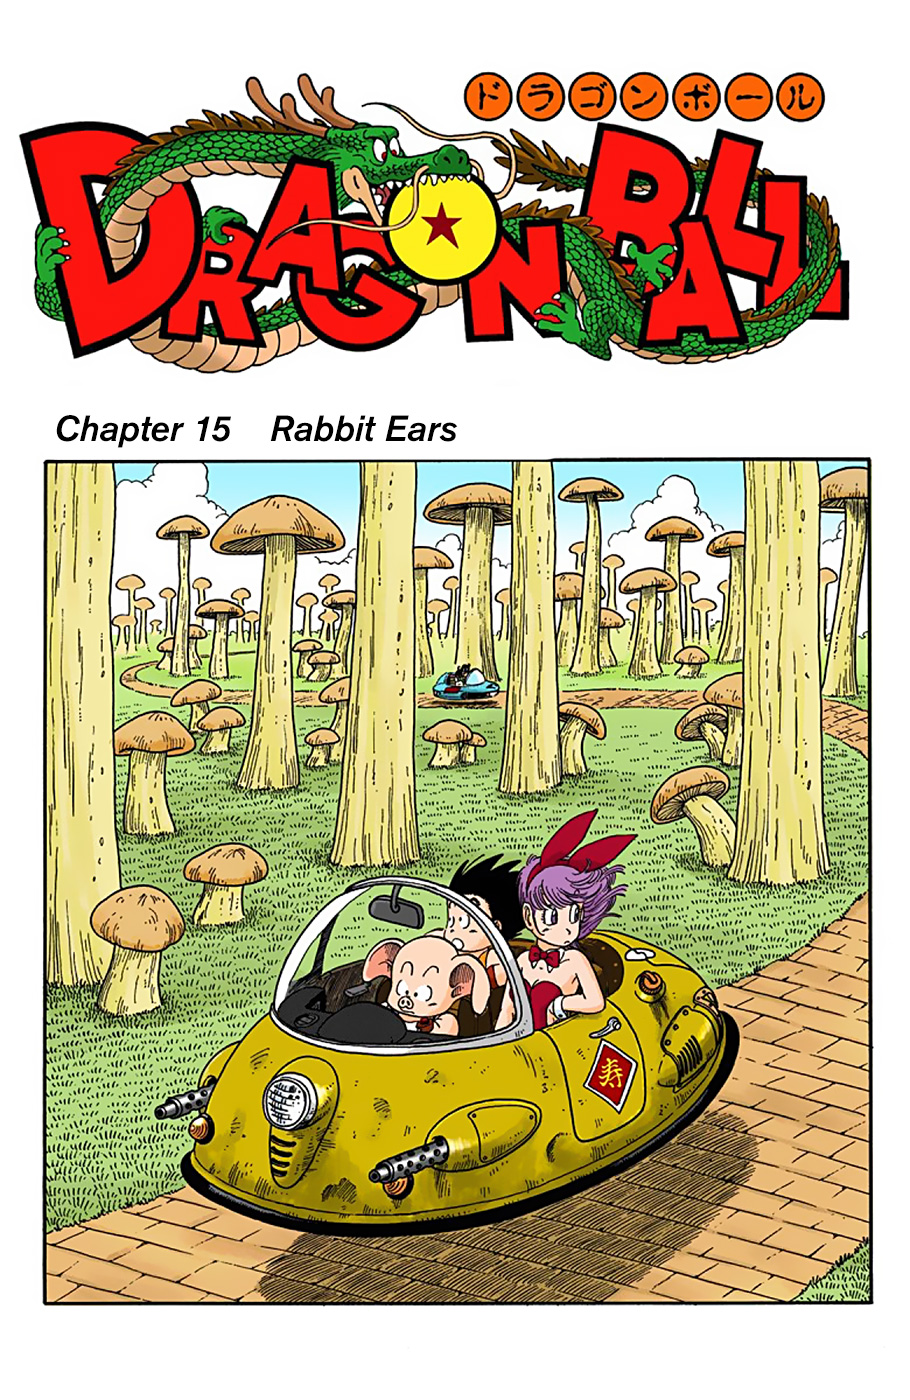 Dragon Ball Full Color Edition Vol. 2 Ch. 16